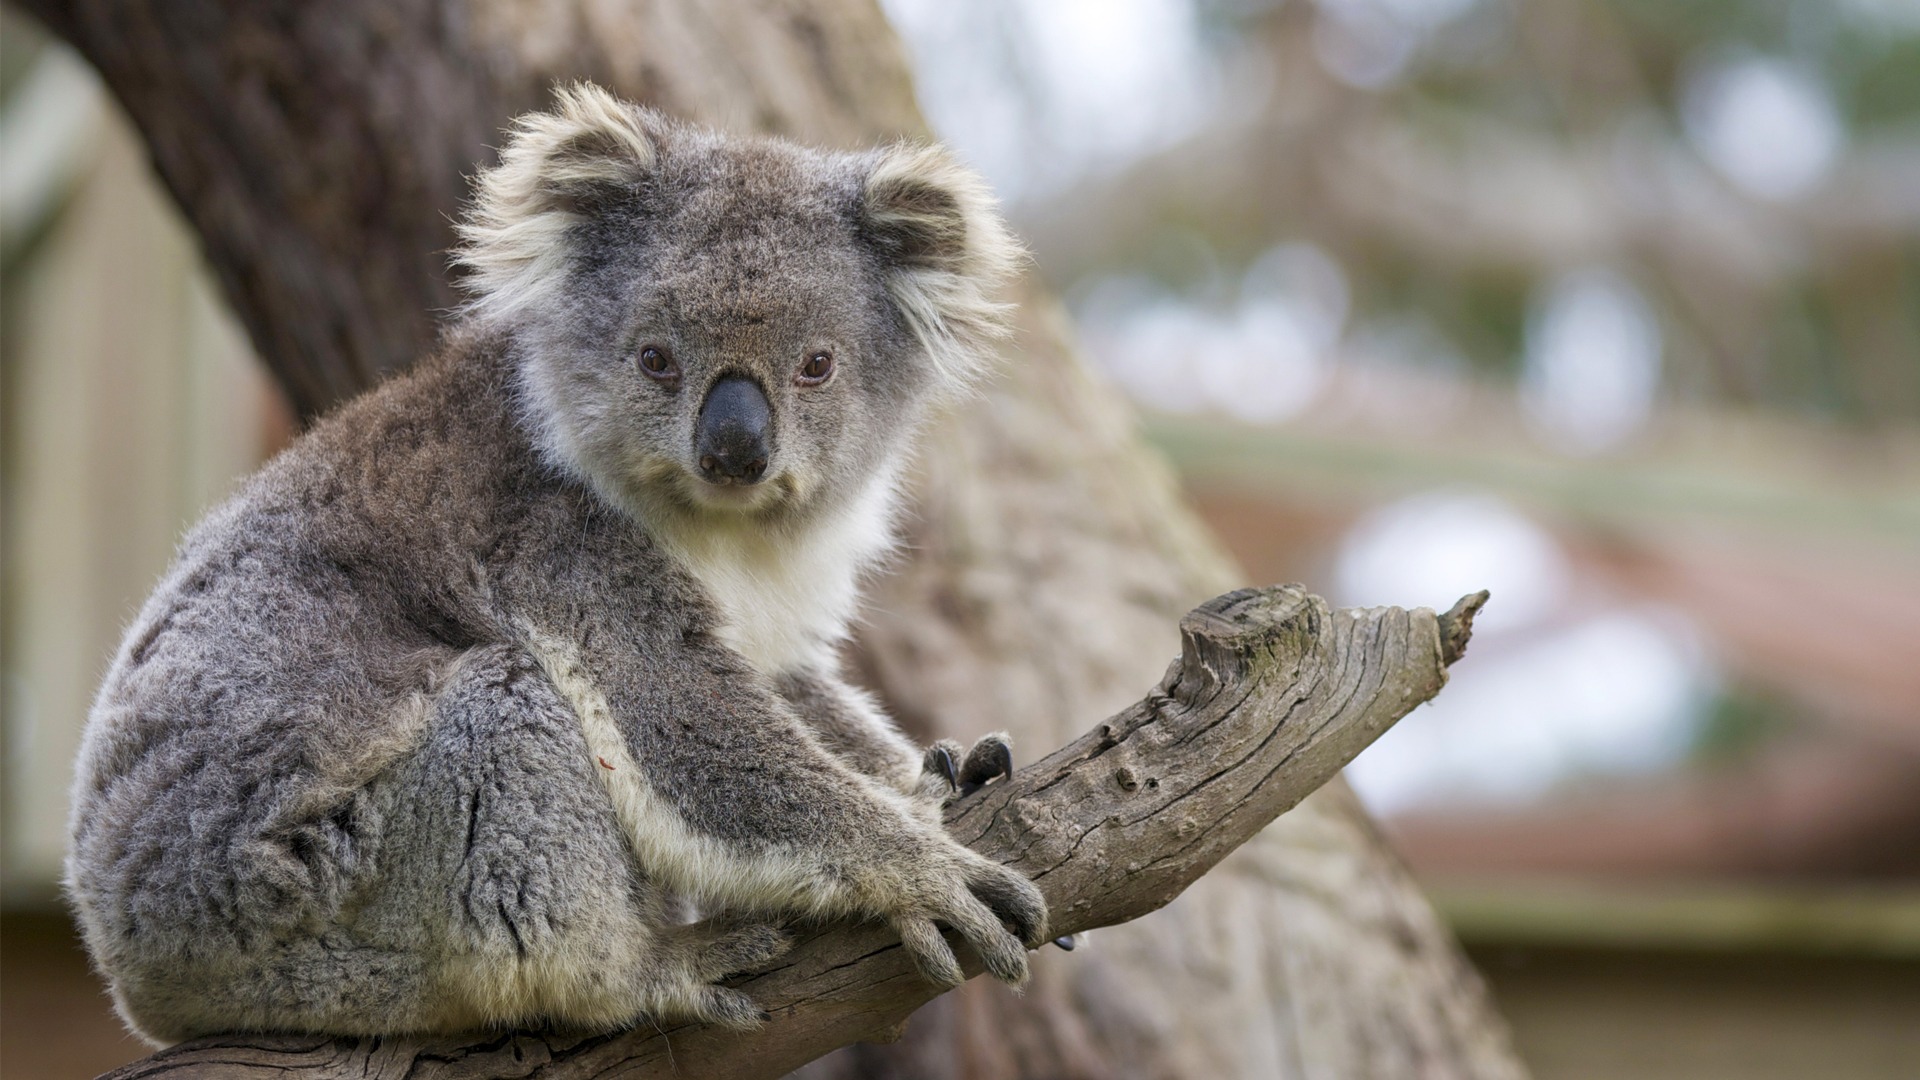  Koala lone pine Brisbane